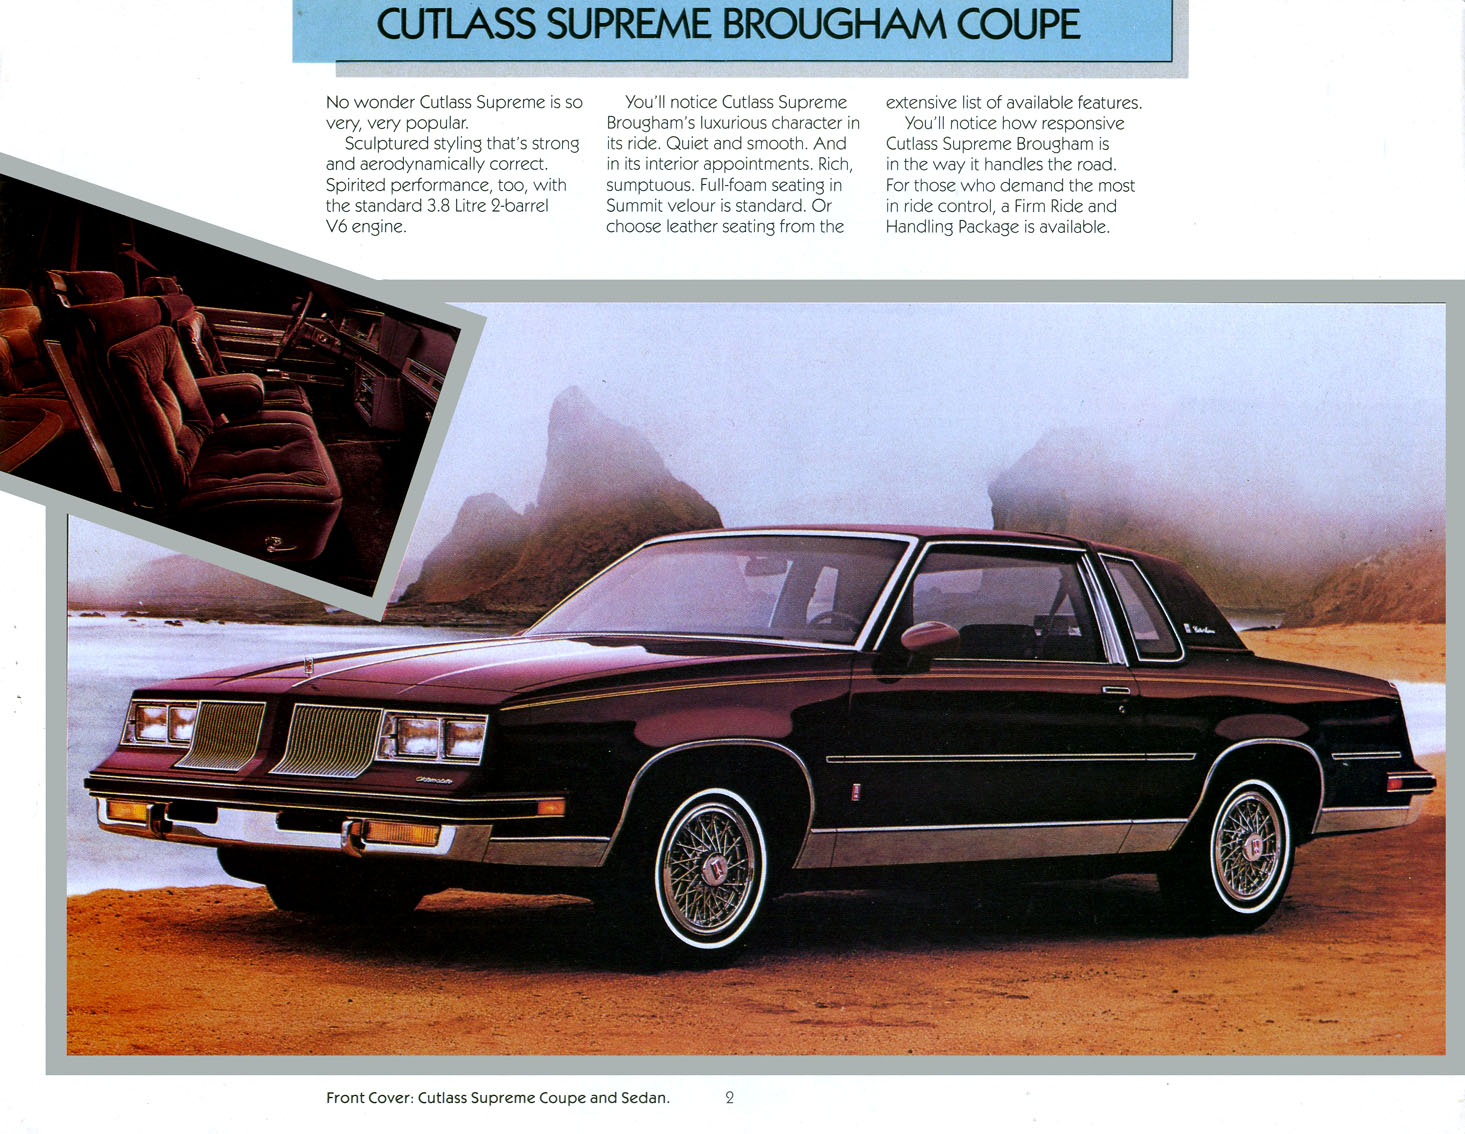 1986 Oldsmobile Cutlass Supreme Folder-02